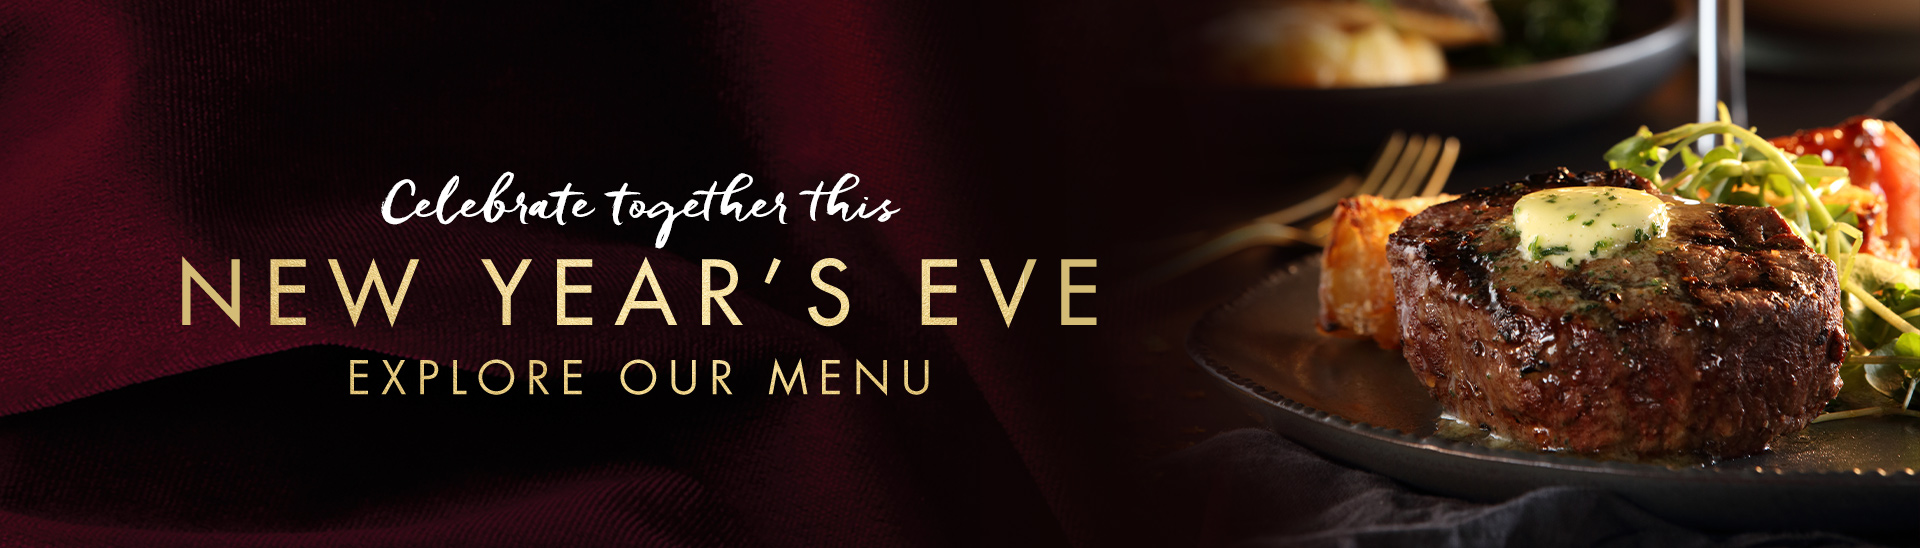 New Year’s eve menu at MILLER & CARTER SHEFFIELD CITY 